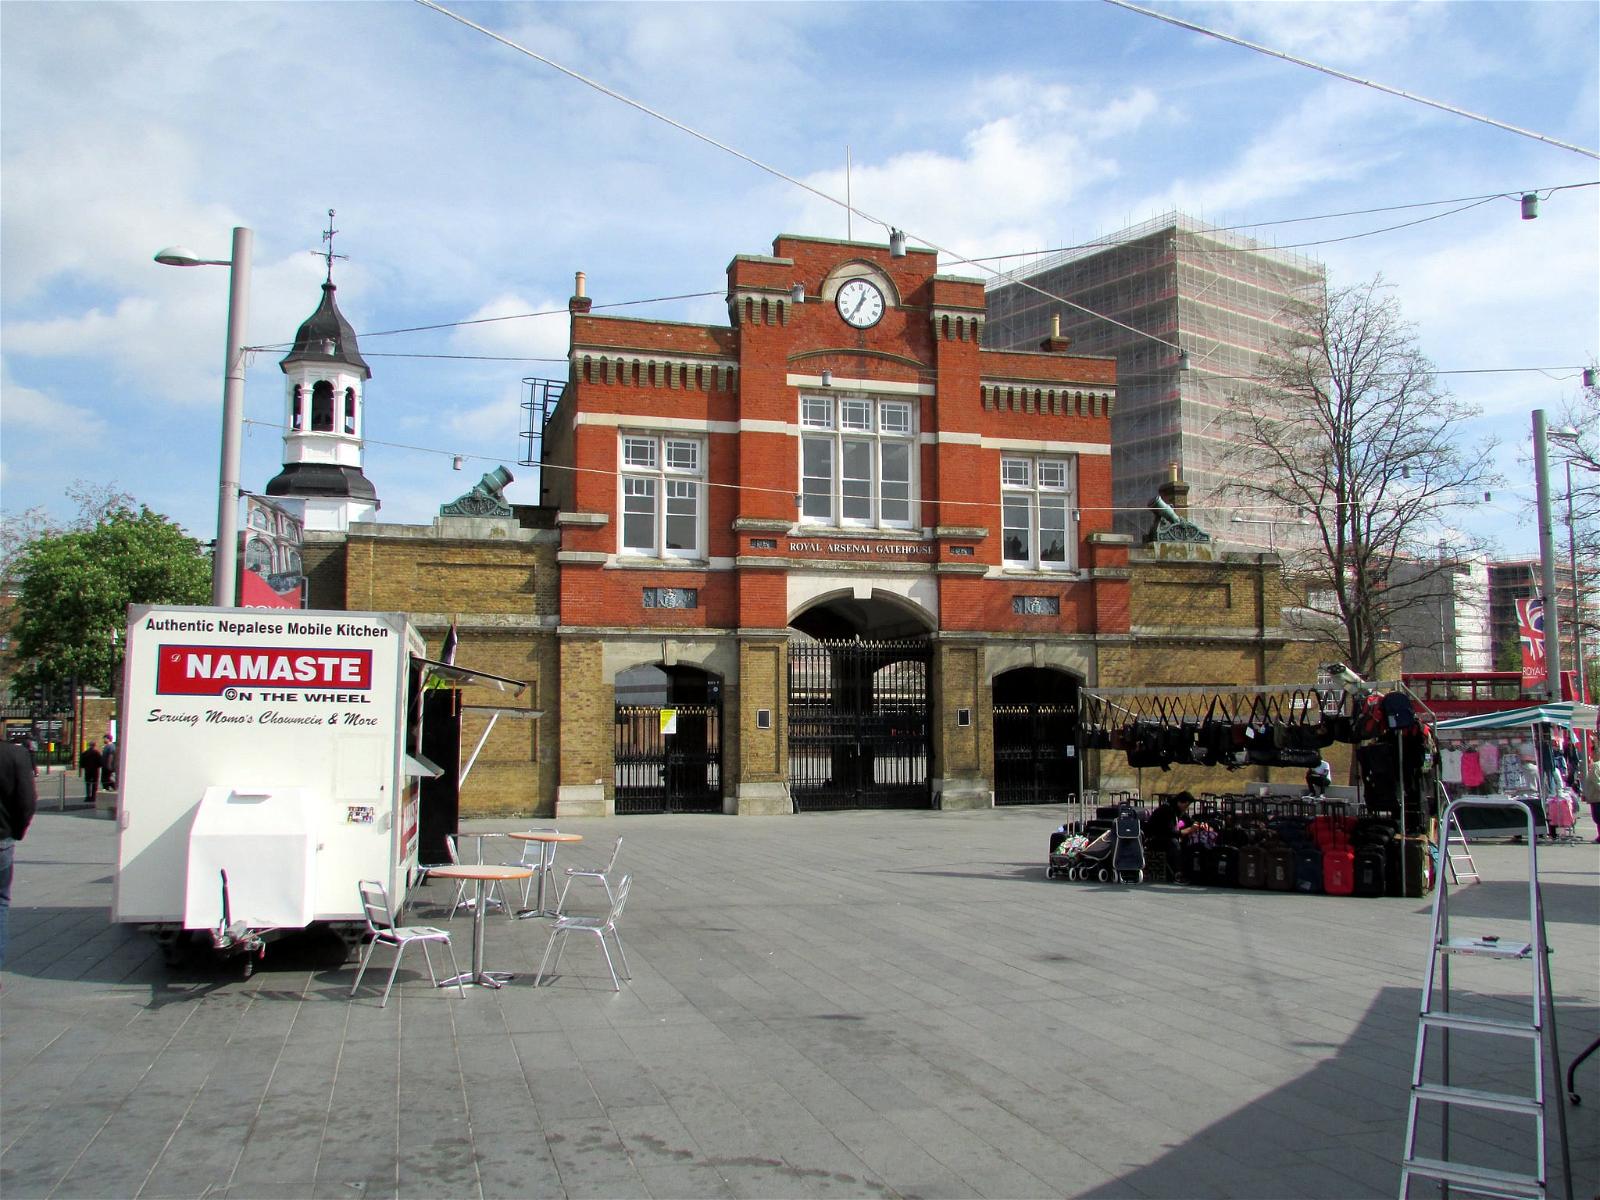 Imagen de Royal Arsenal Gatehouse. london woolwich